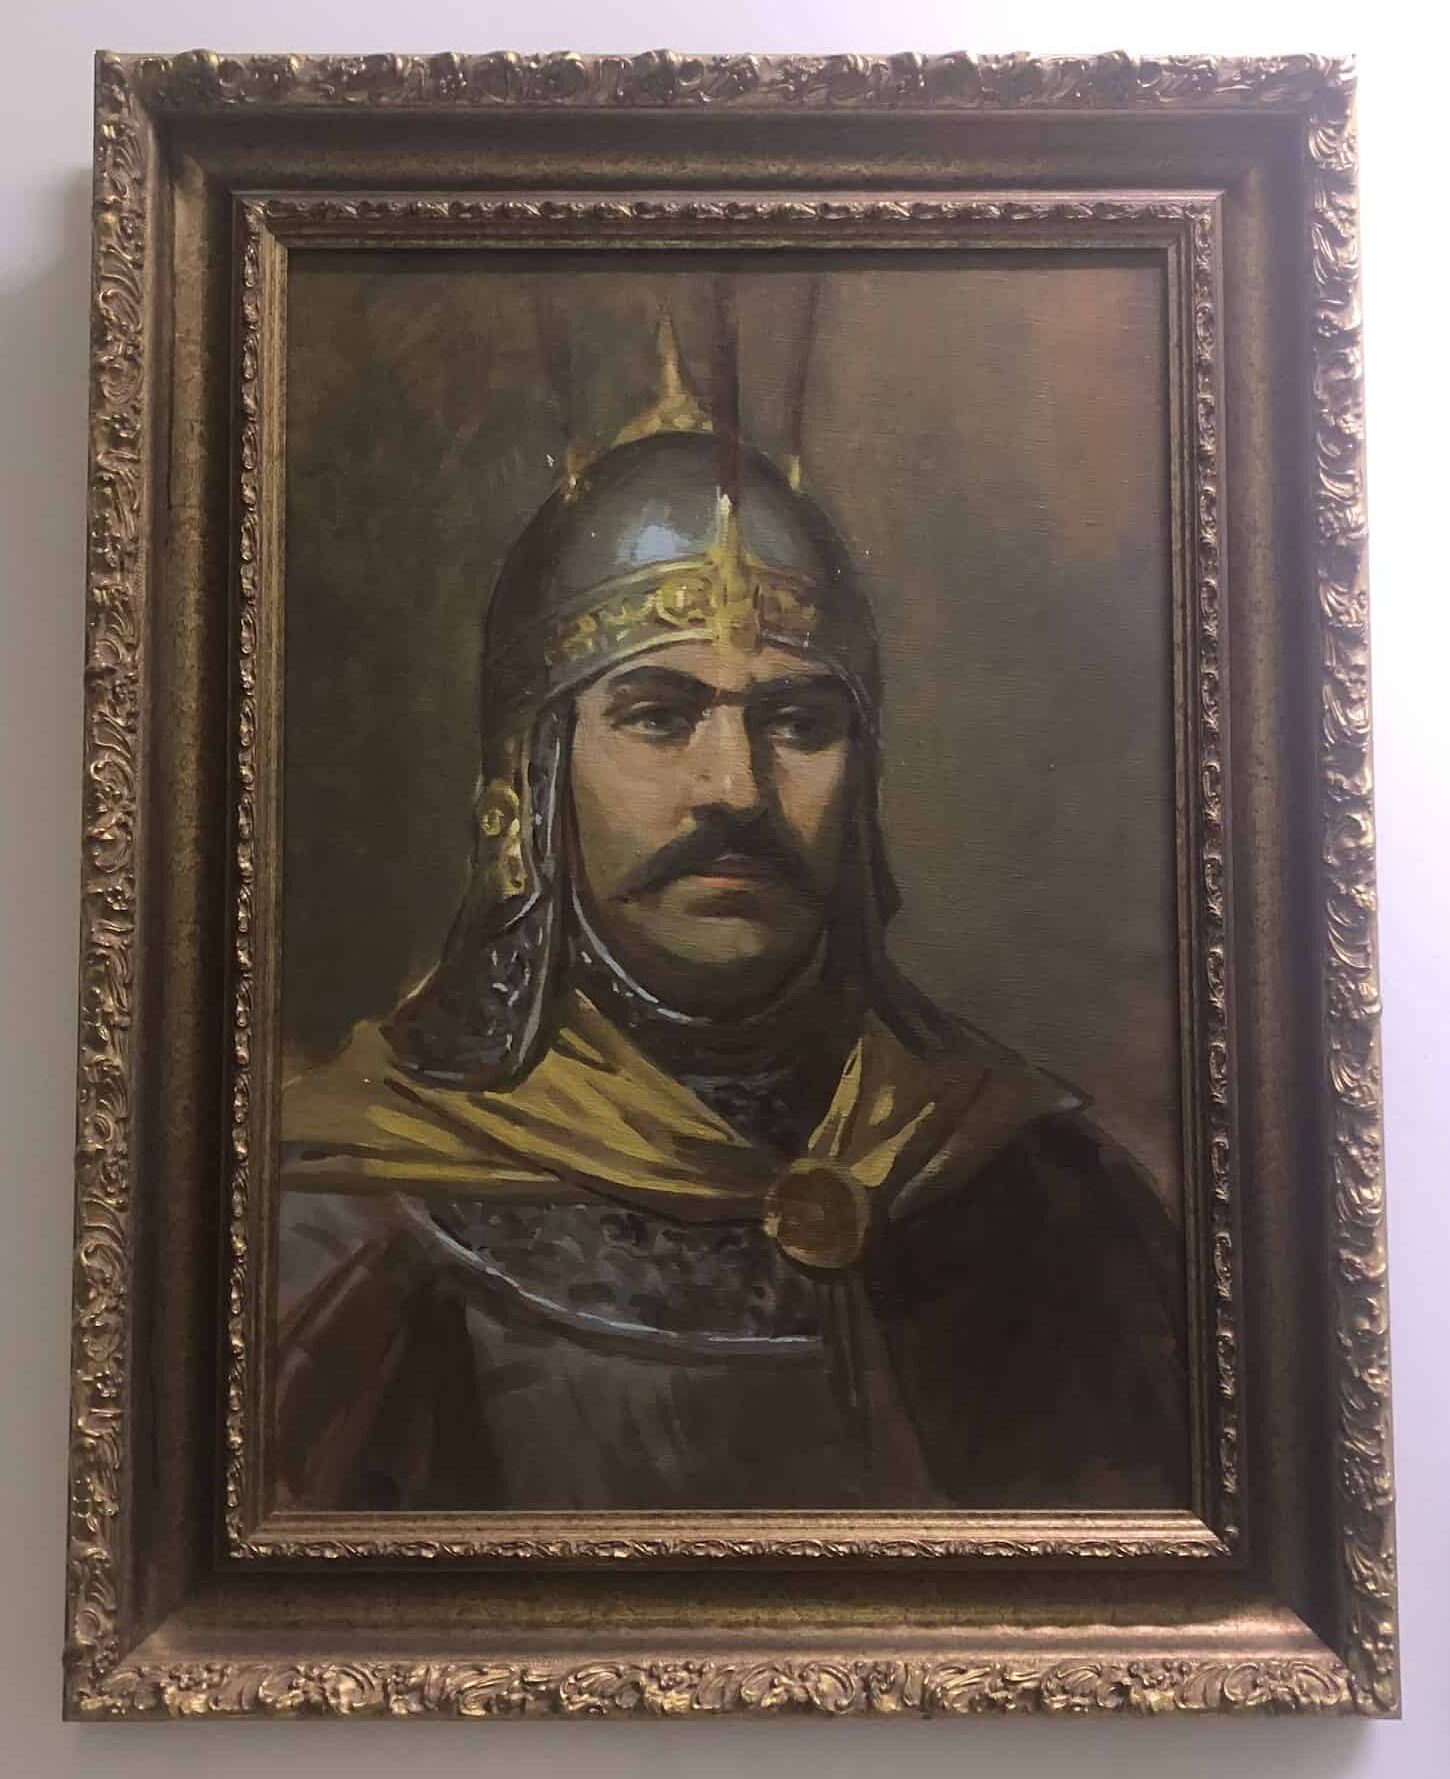 Portrait of Alp Arslan in the Seljuk Hall at the Harbiye Military Museum in Istanbul, Turkey